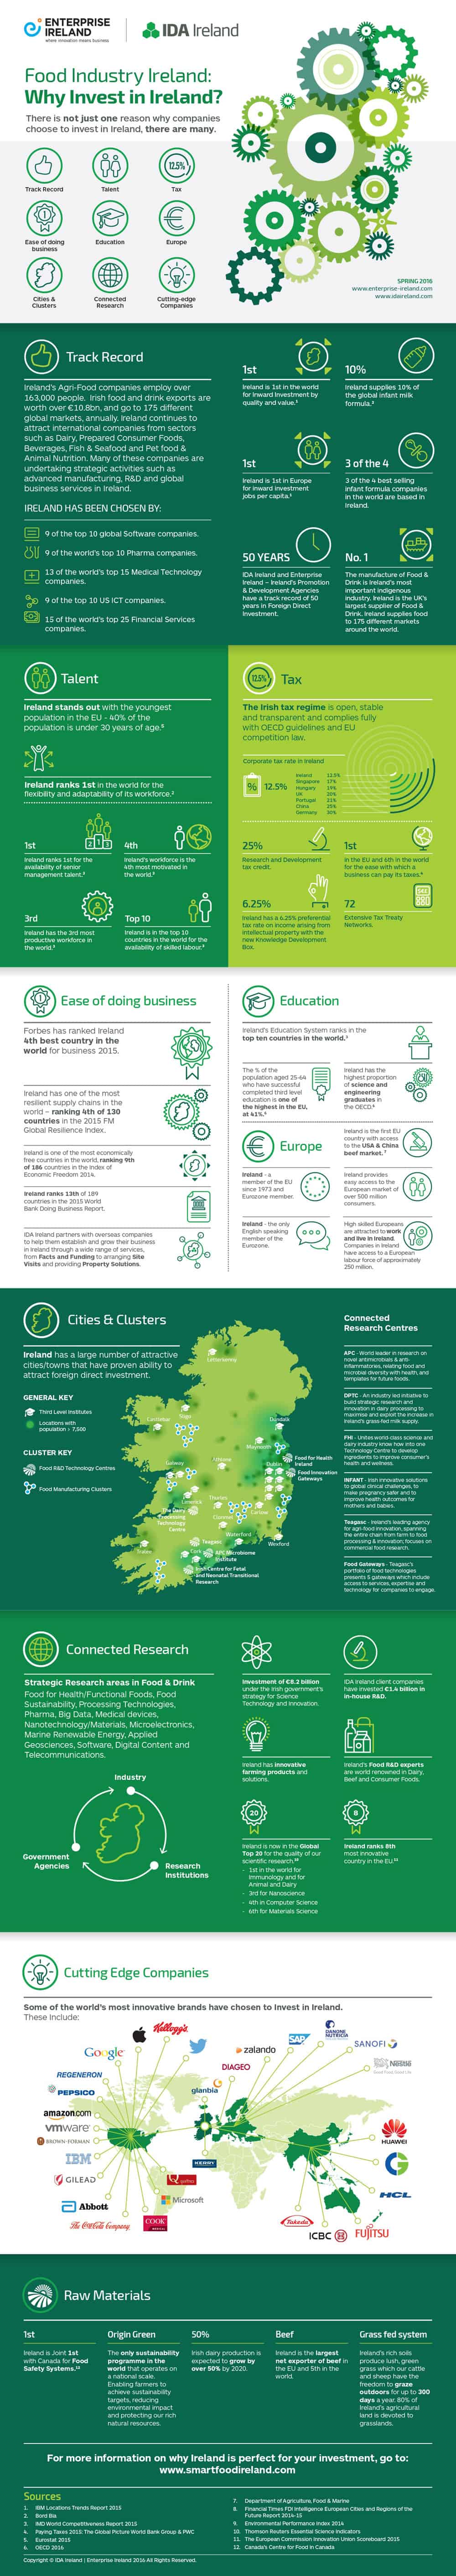 food industry ireland infographic